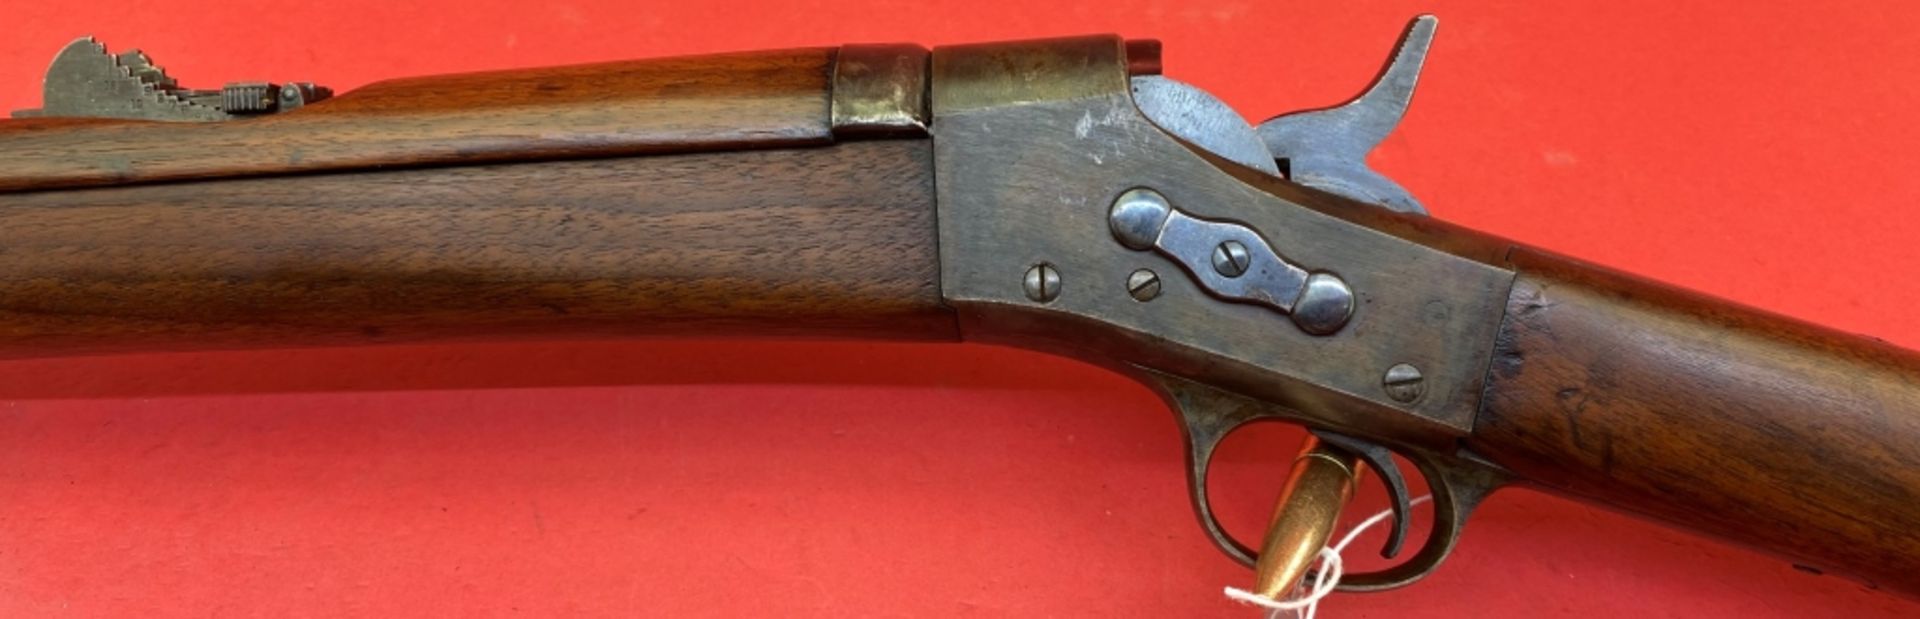 Remington No.5 7mm Mauser Rifle - Image 9 of 10